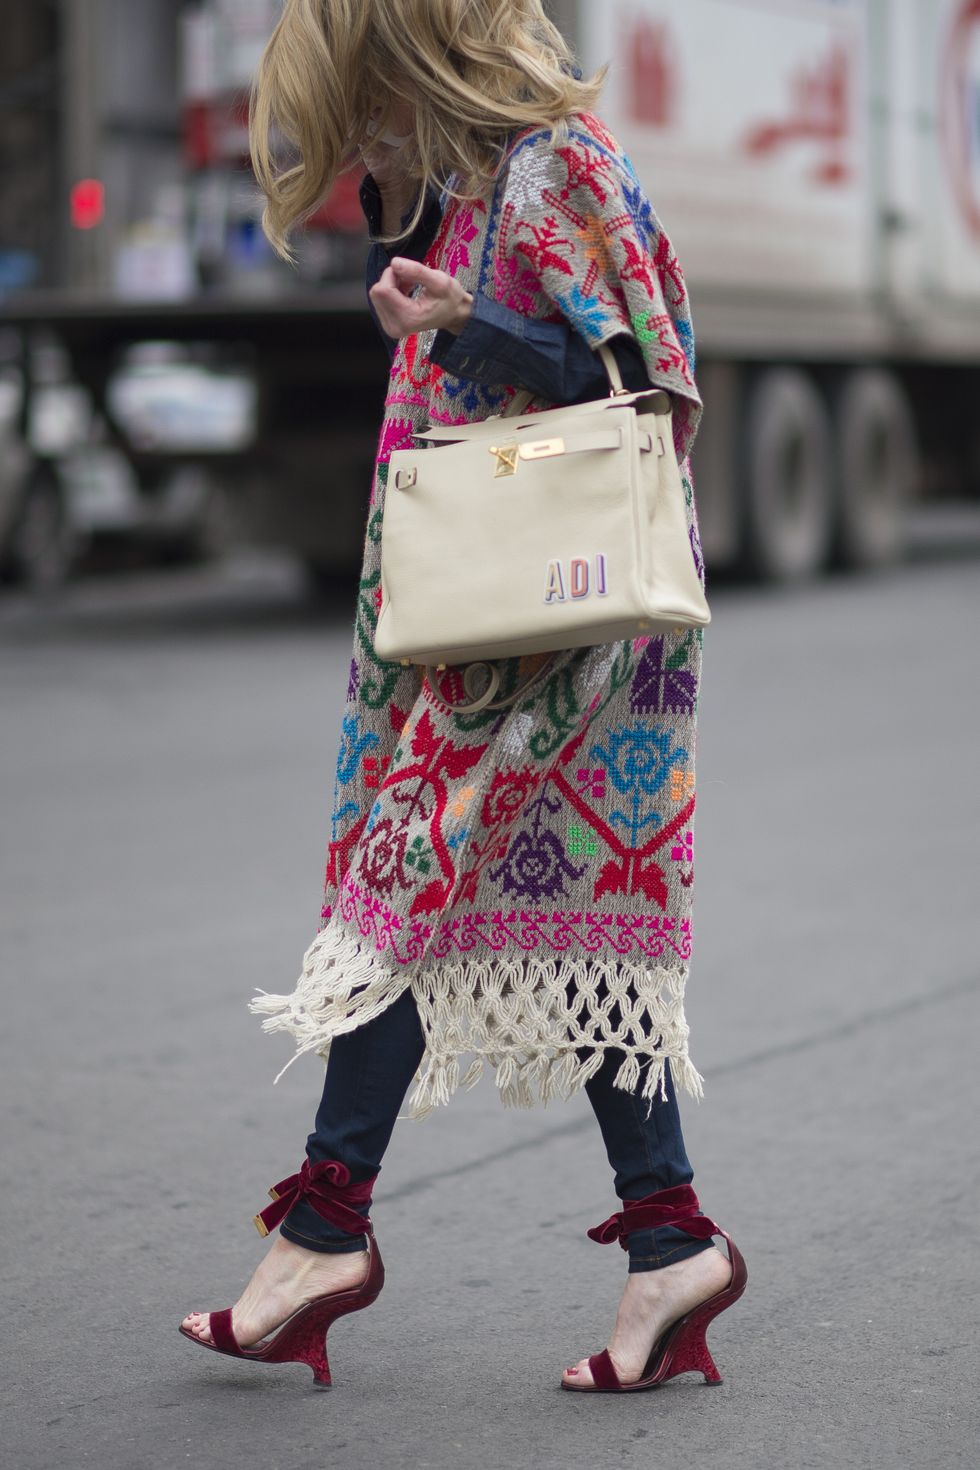 How to summer your wardrobe: wear crochet